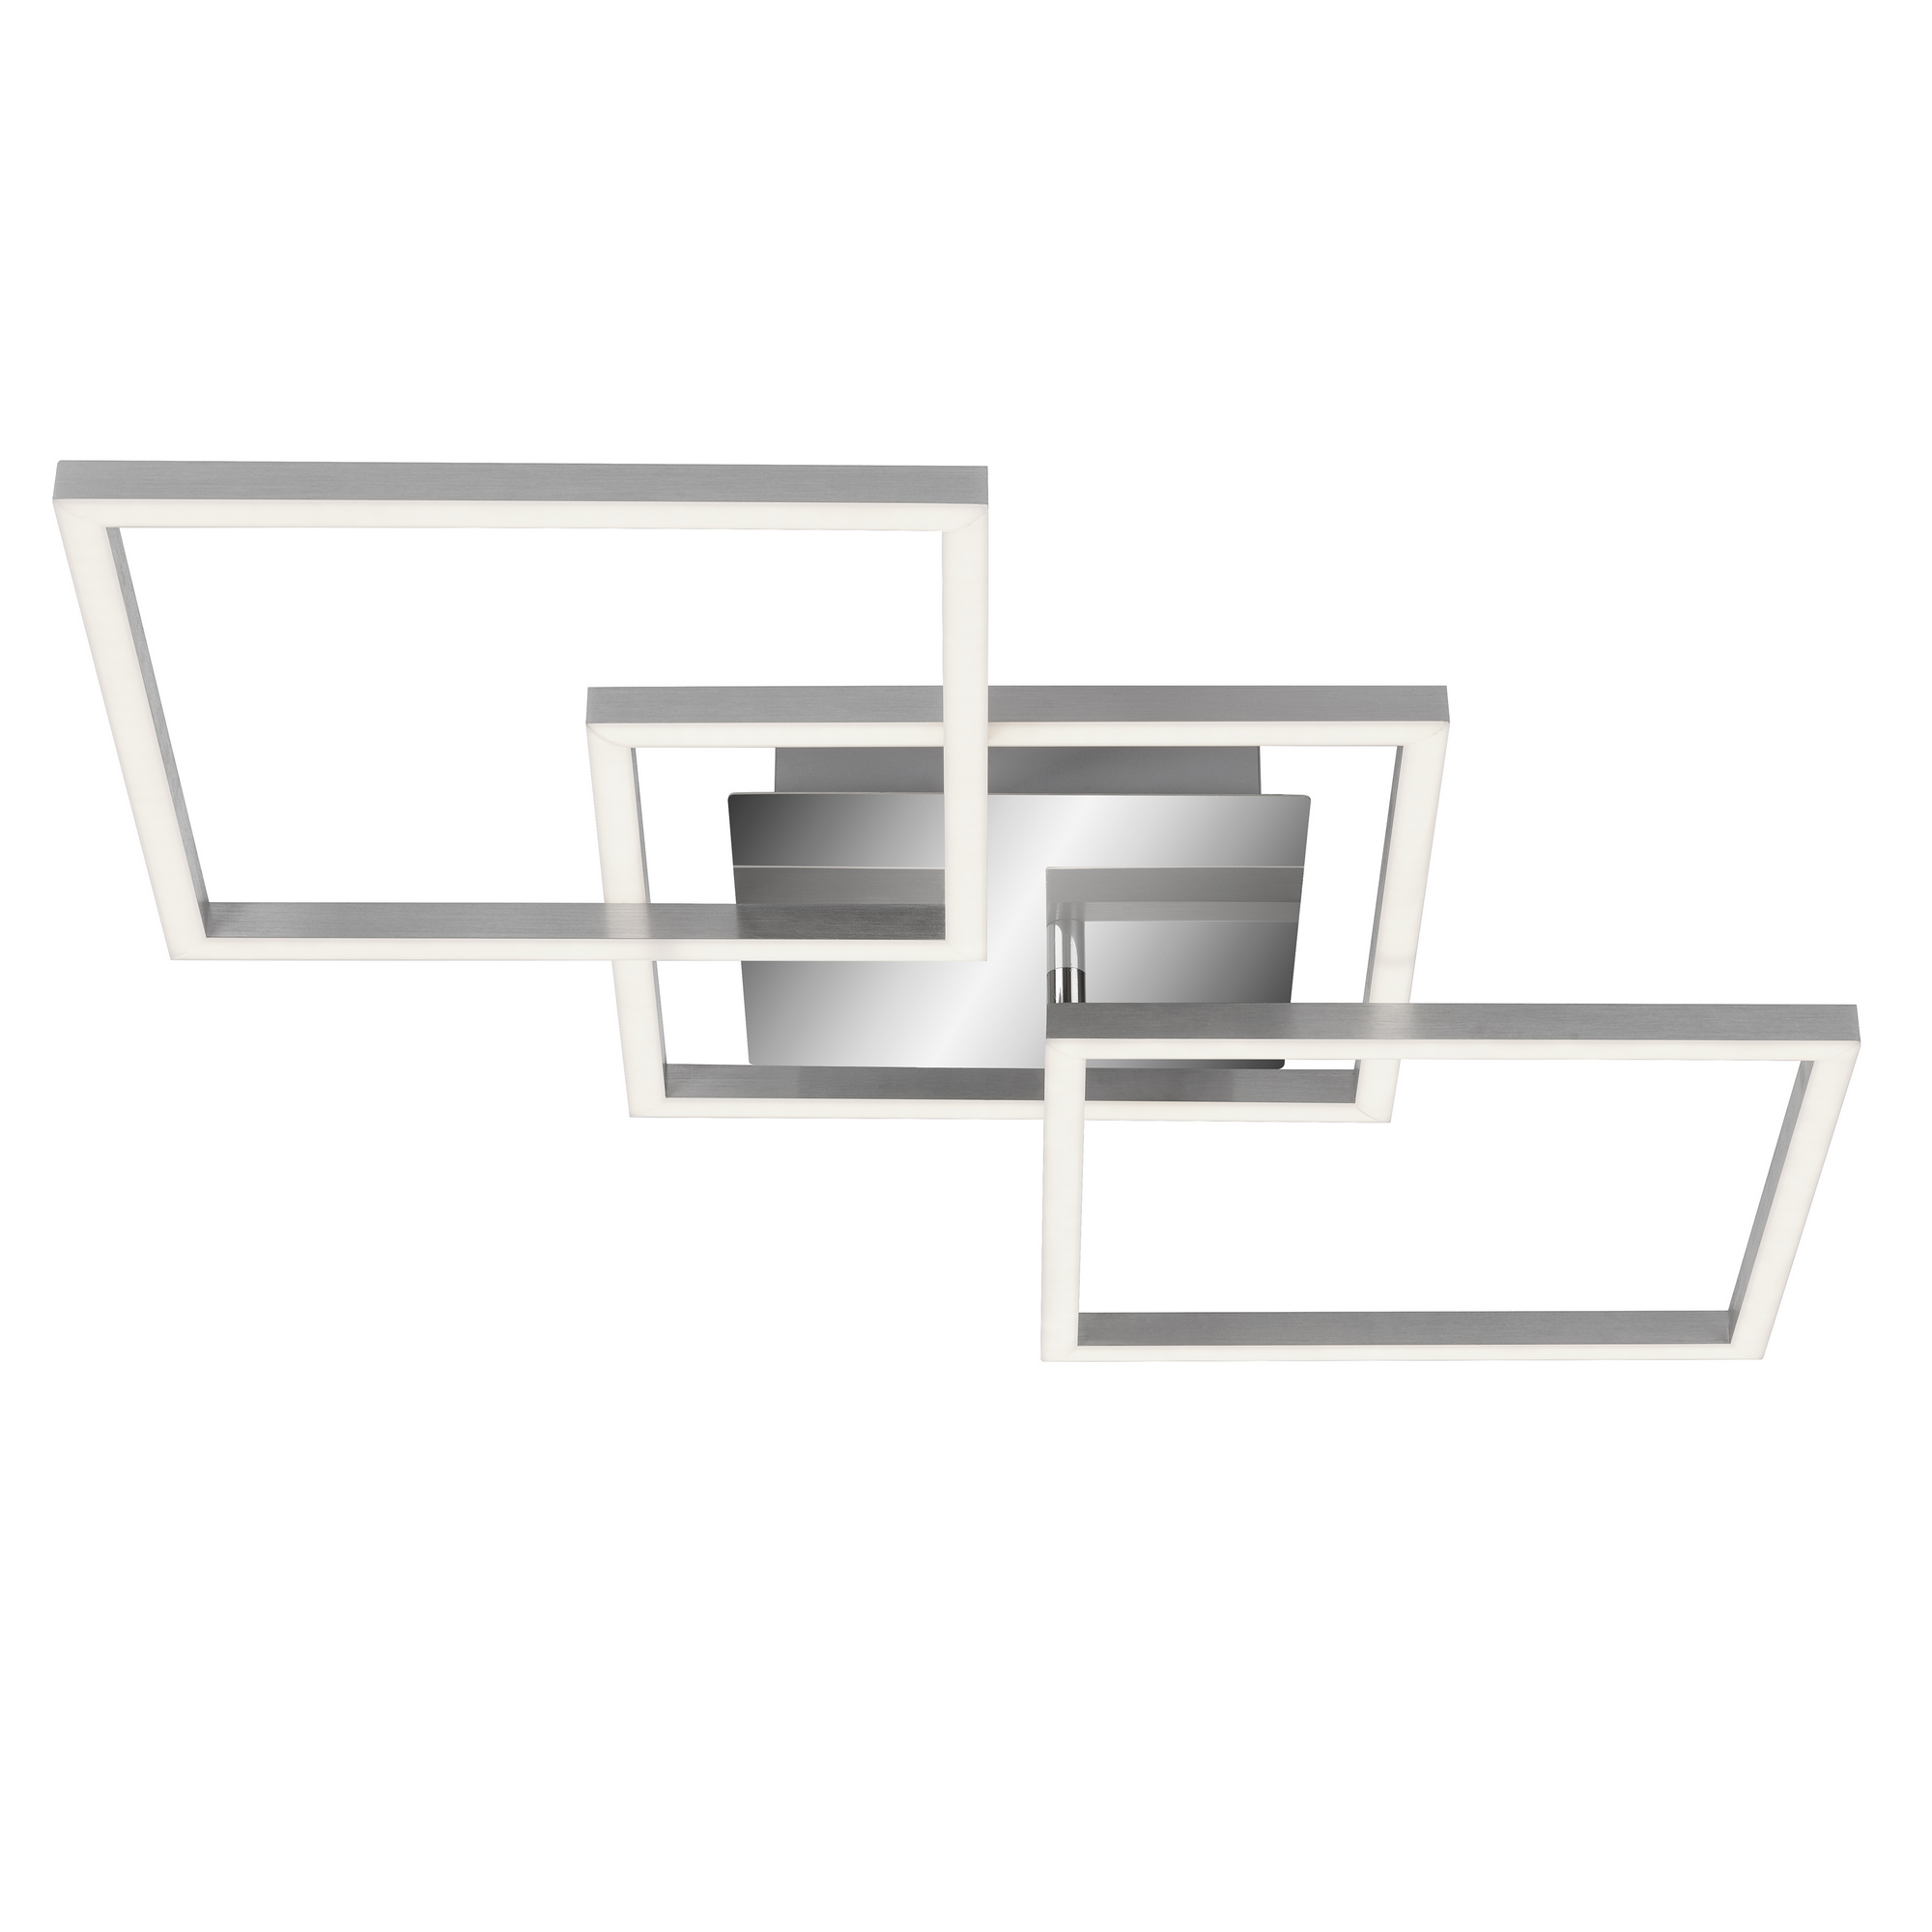 LED-Deckenleuchte 'Frame' chrom-/aluminiumfarben, 2600 lm, 36,8 x 76,3 cm + product picture